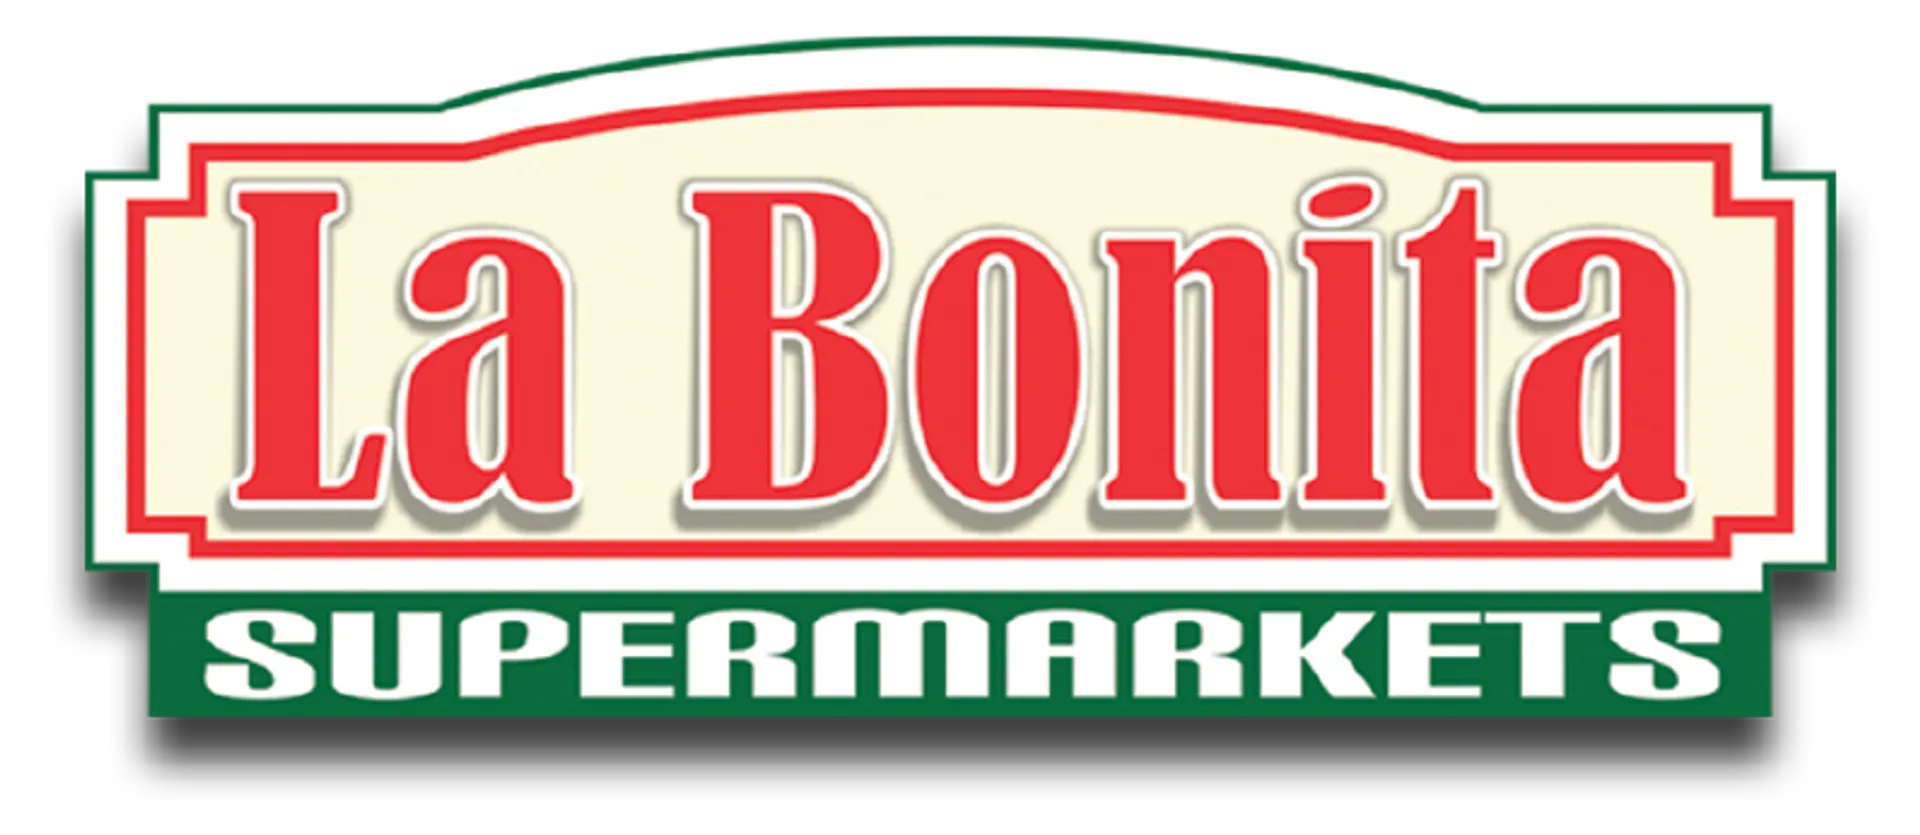 SUPERMERCADO LA BONITA logo de catálogo